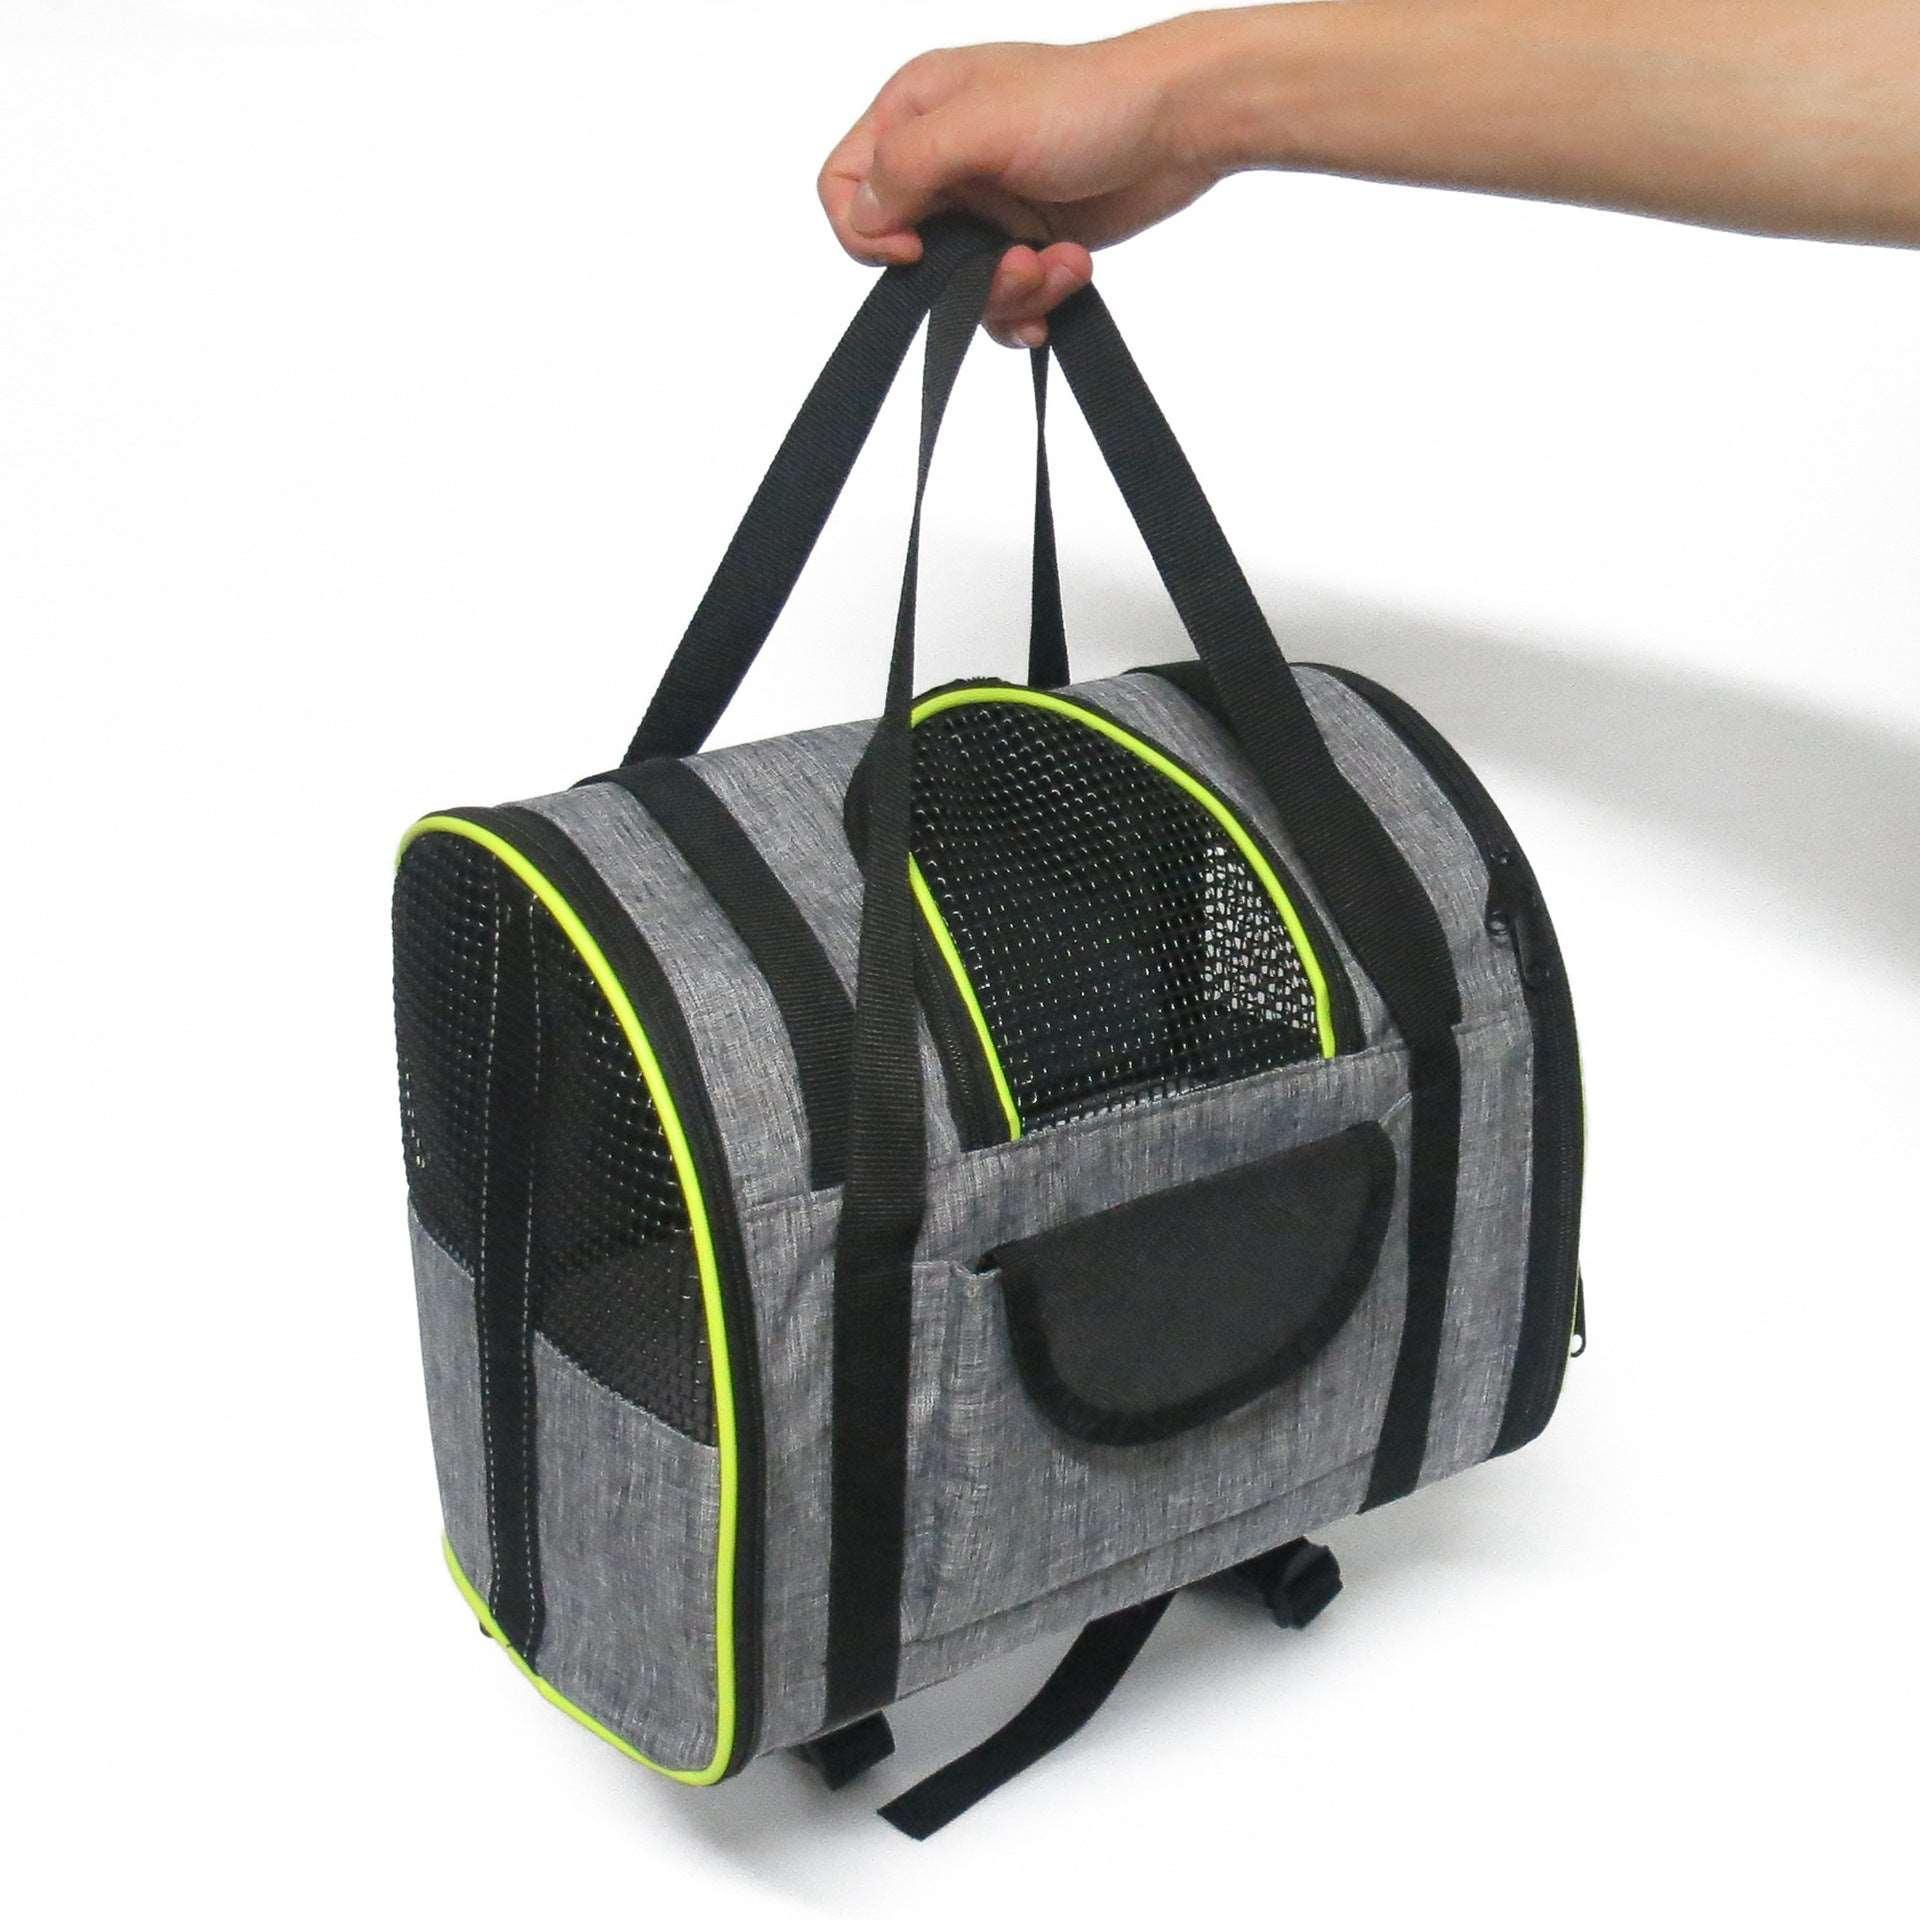 Foldable Multi-functional Pet Travel Carrier Bag